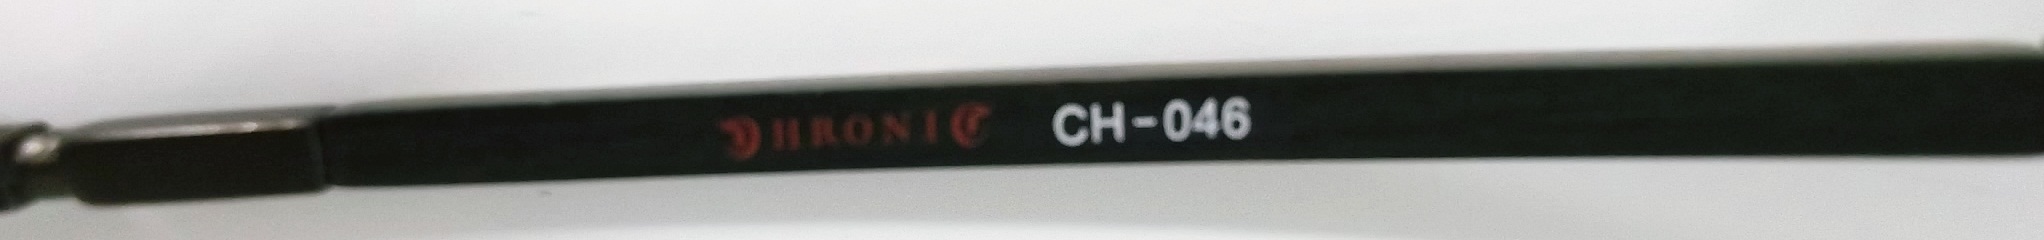 CHRONIC 022104